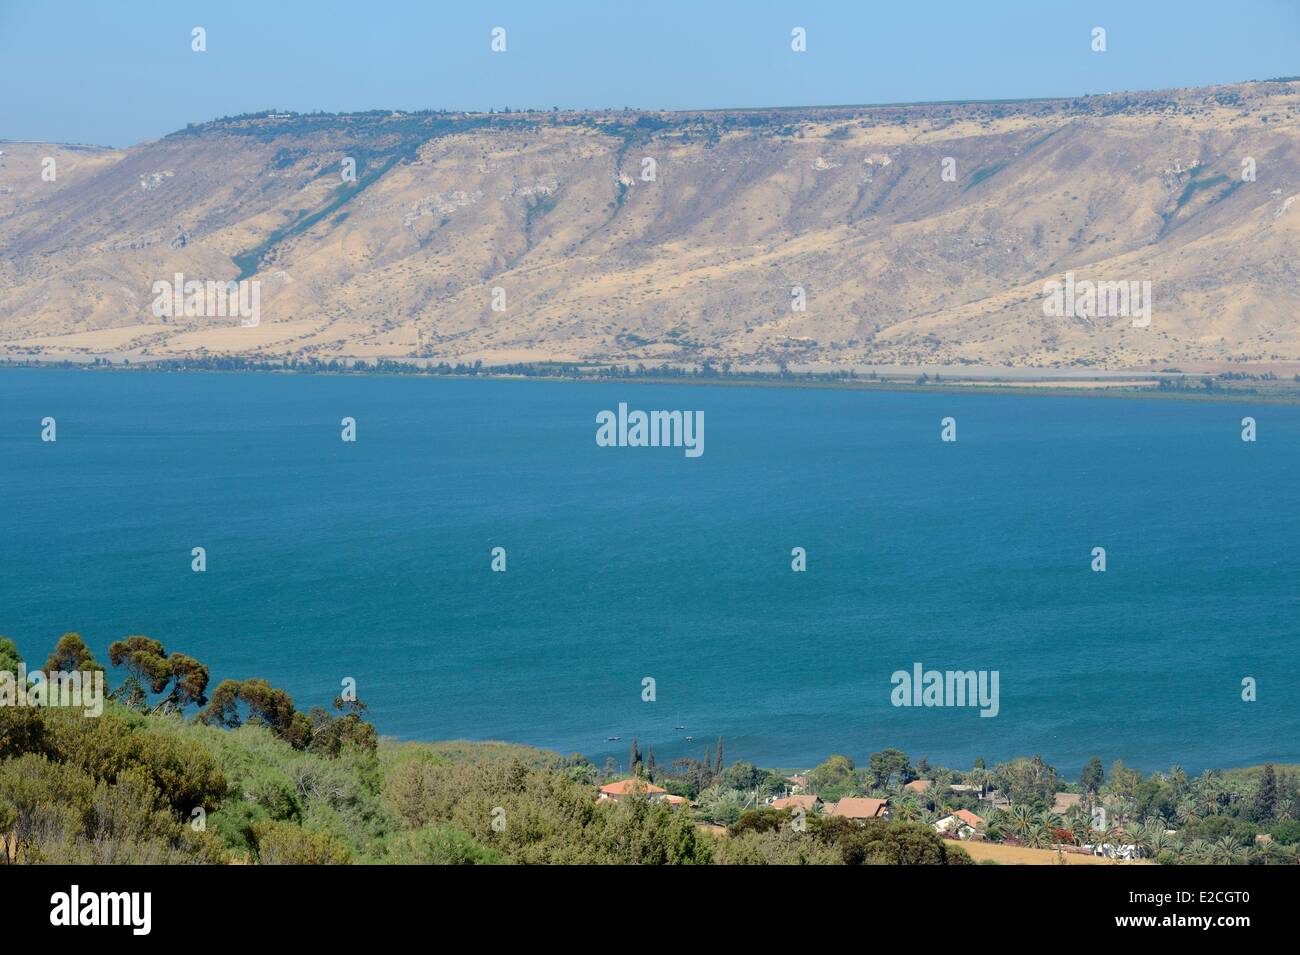 Israel, Northern District, Galilee, Tiberias, Sea of Galilee (Lake ...